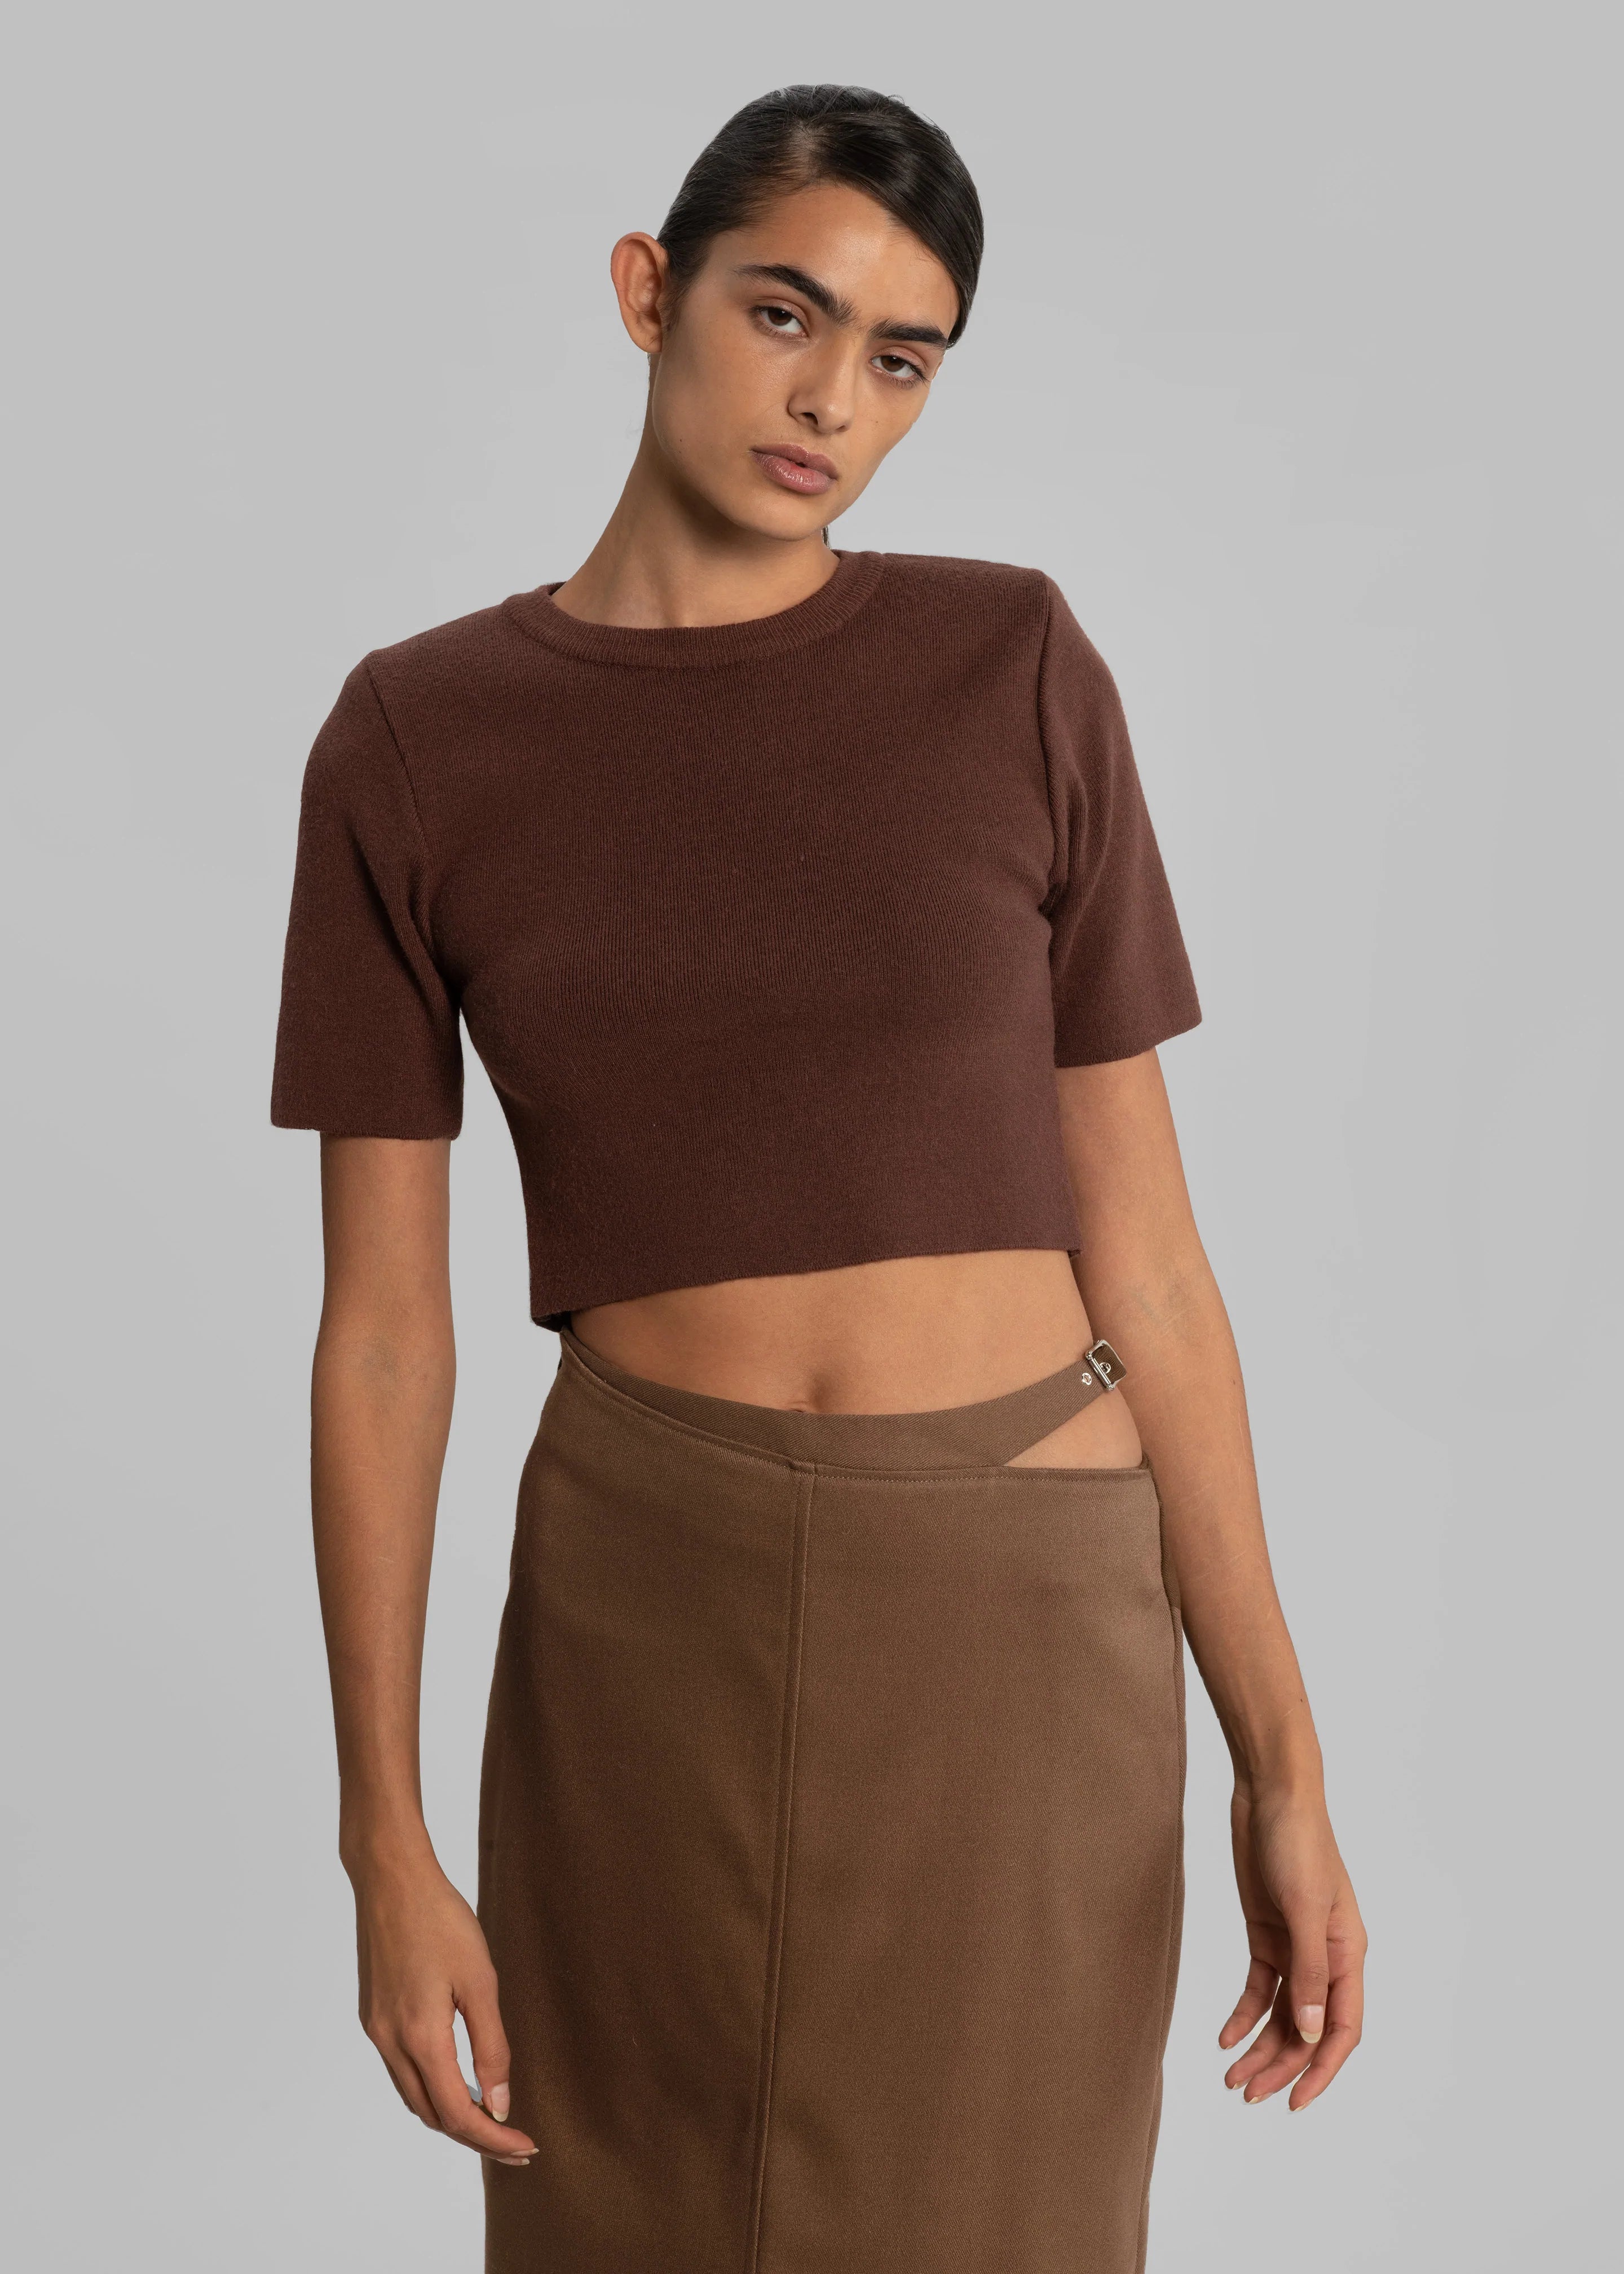 Stacia Cut Out Midi Skirt - Brown - 7